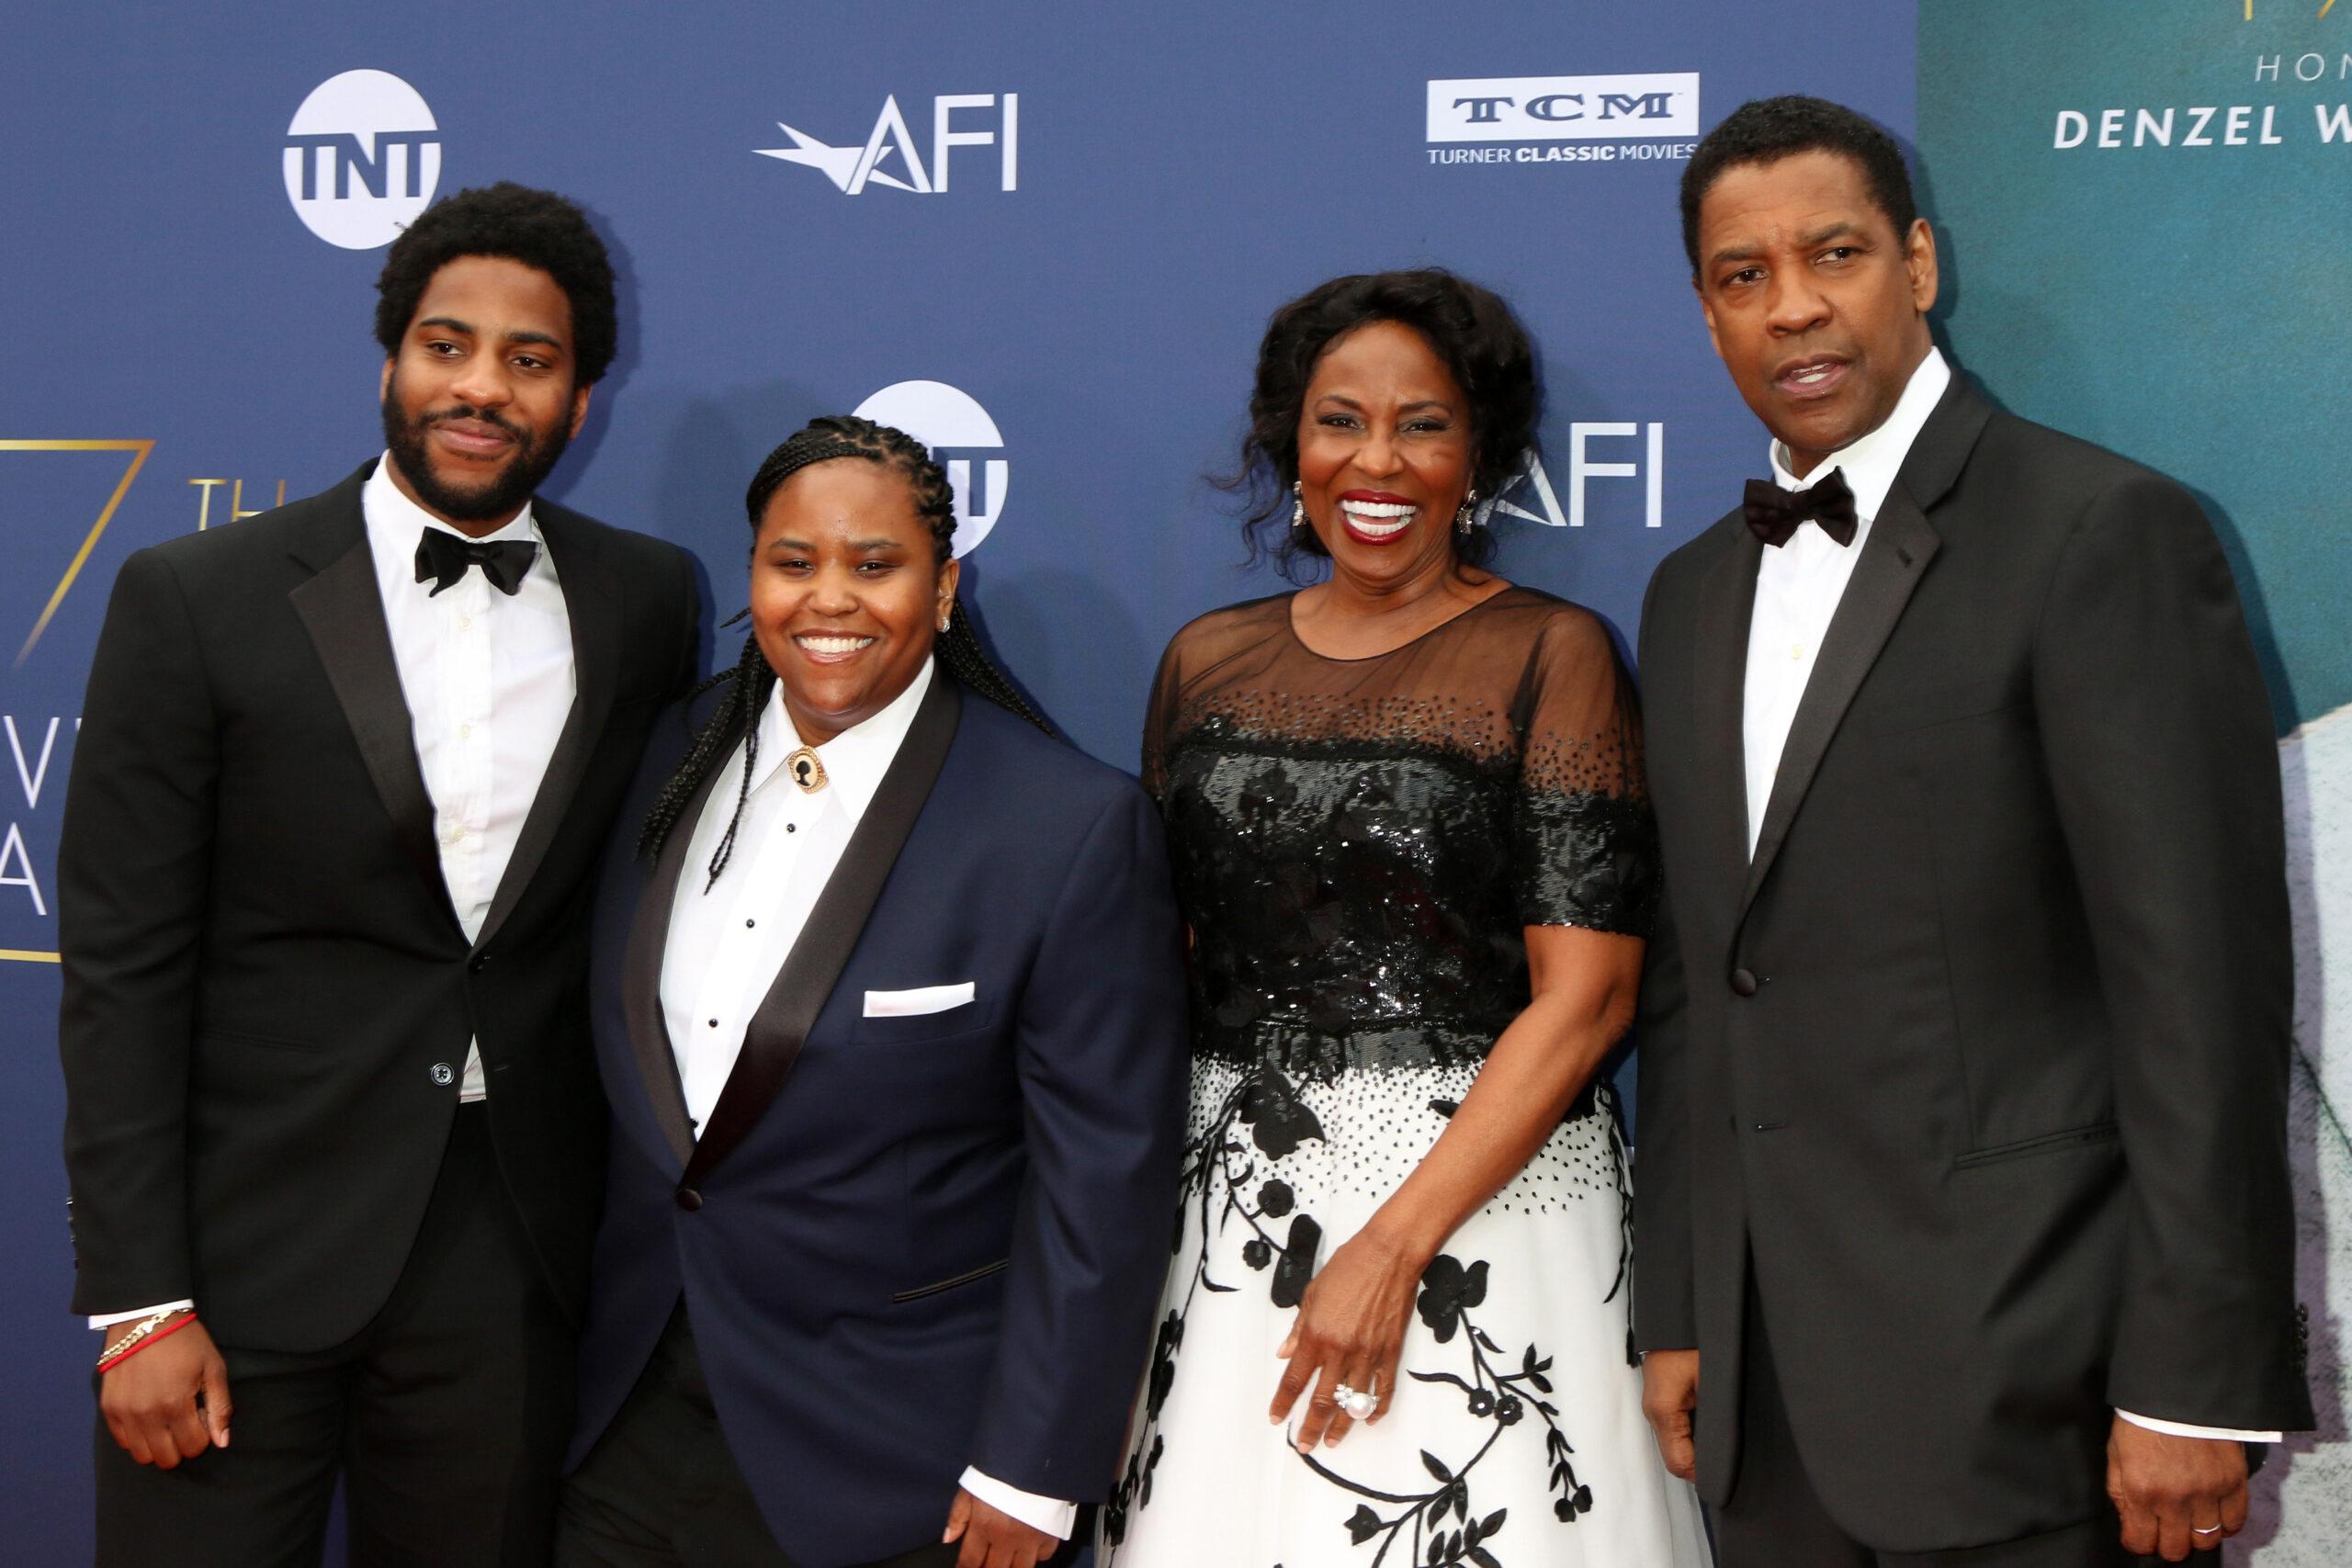 Denzel Washington and his family at AFI Honors Denzel Washington - Los Angeles